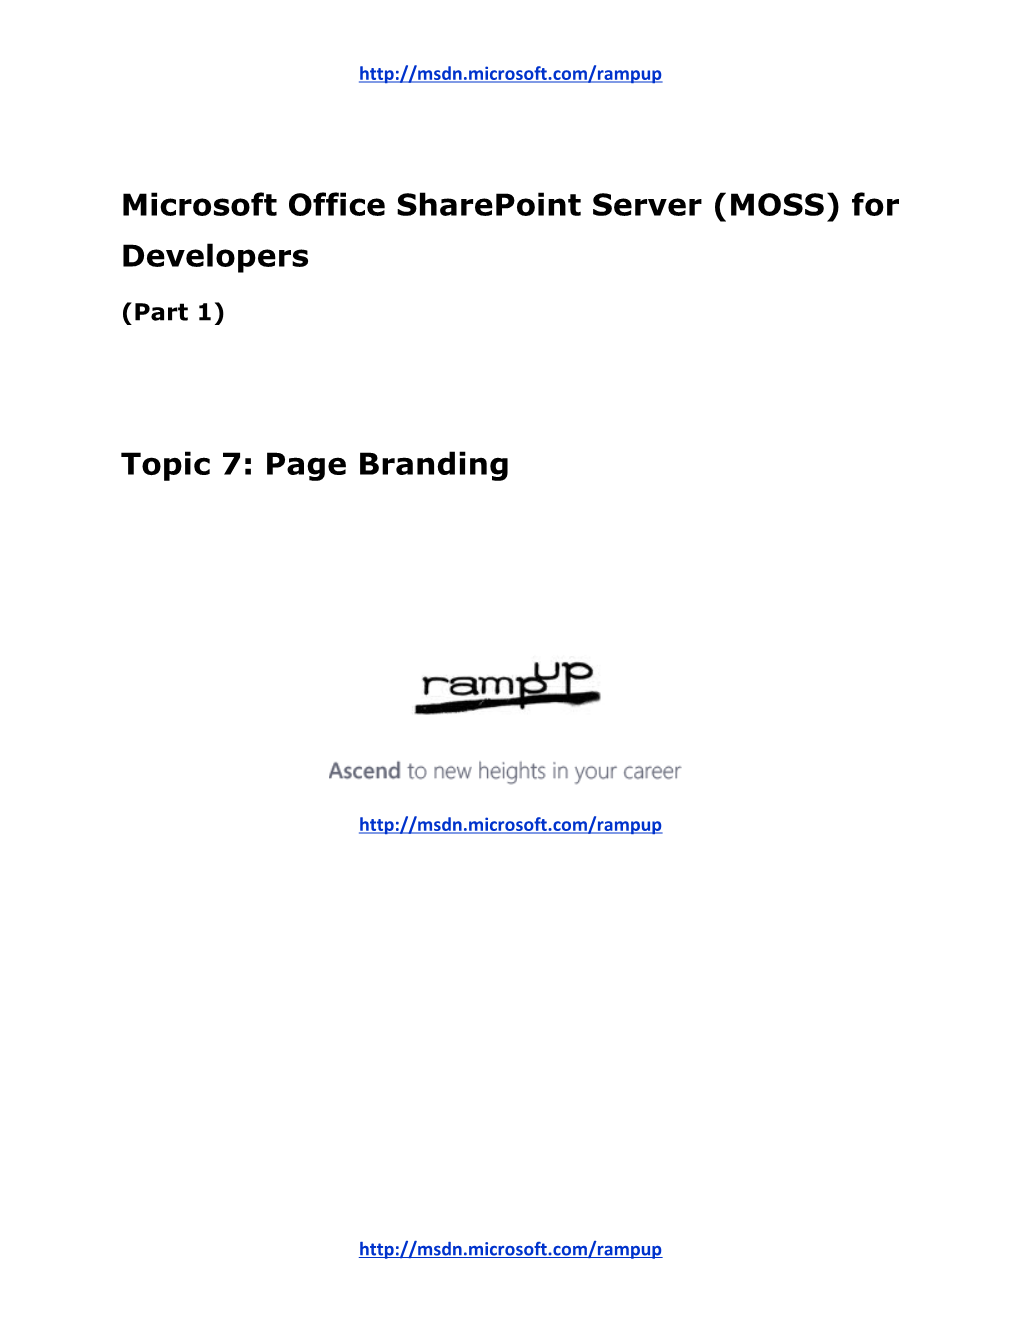 Microsoft Office Sharepoint Server (MOSS) for Developers